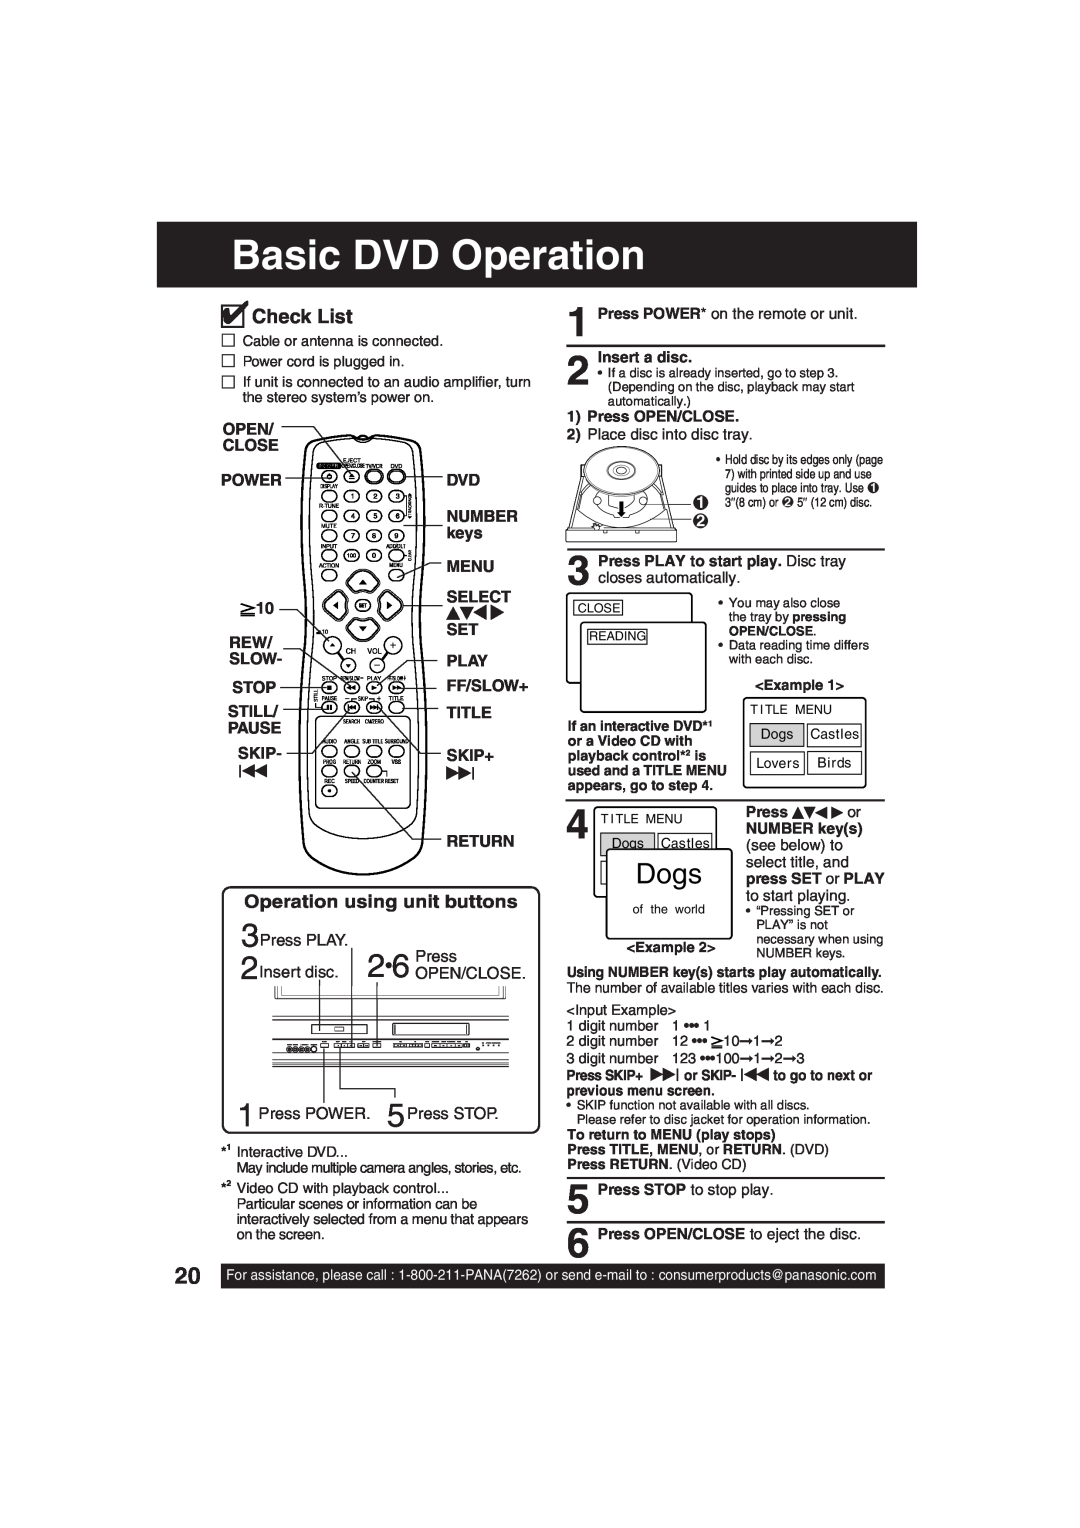 Panasonic PV-DF203 Basic DVD Operation, Open Close, Power, Menu, Slow, Title, Skip+, Return, 3Press PLAY, 2Insert disc 